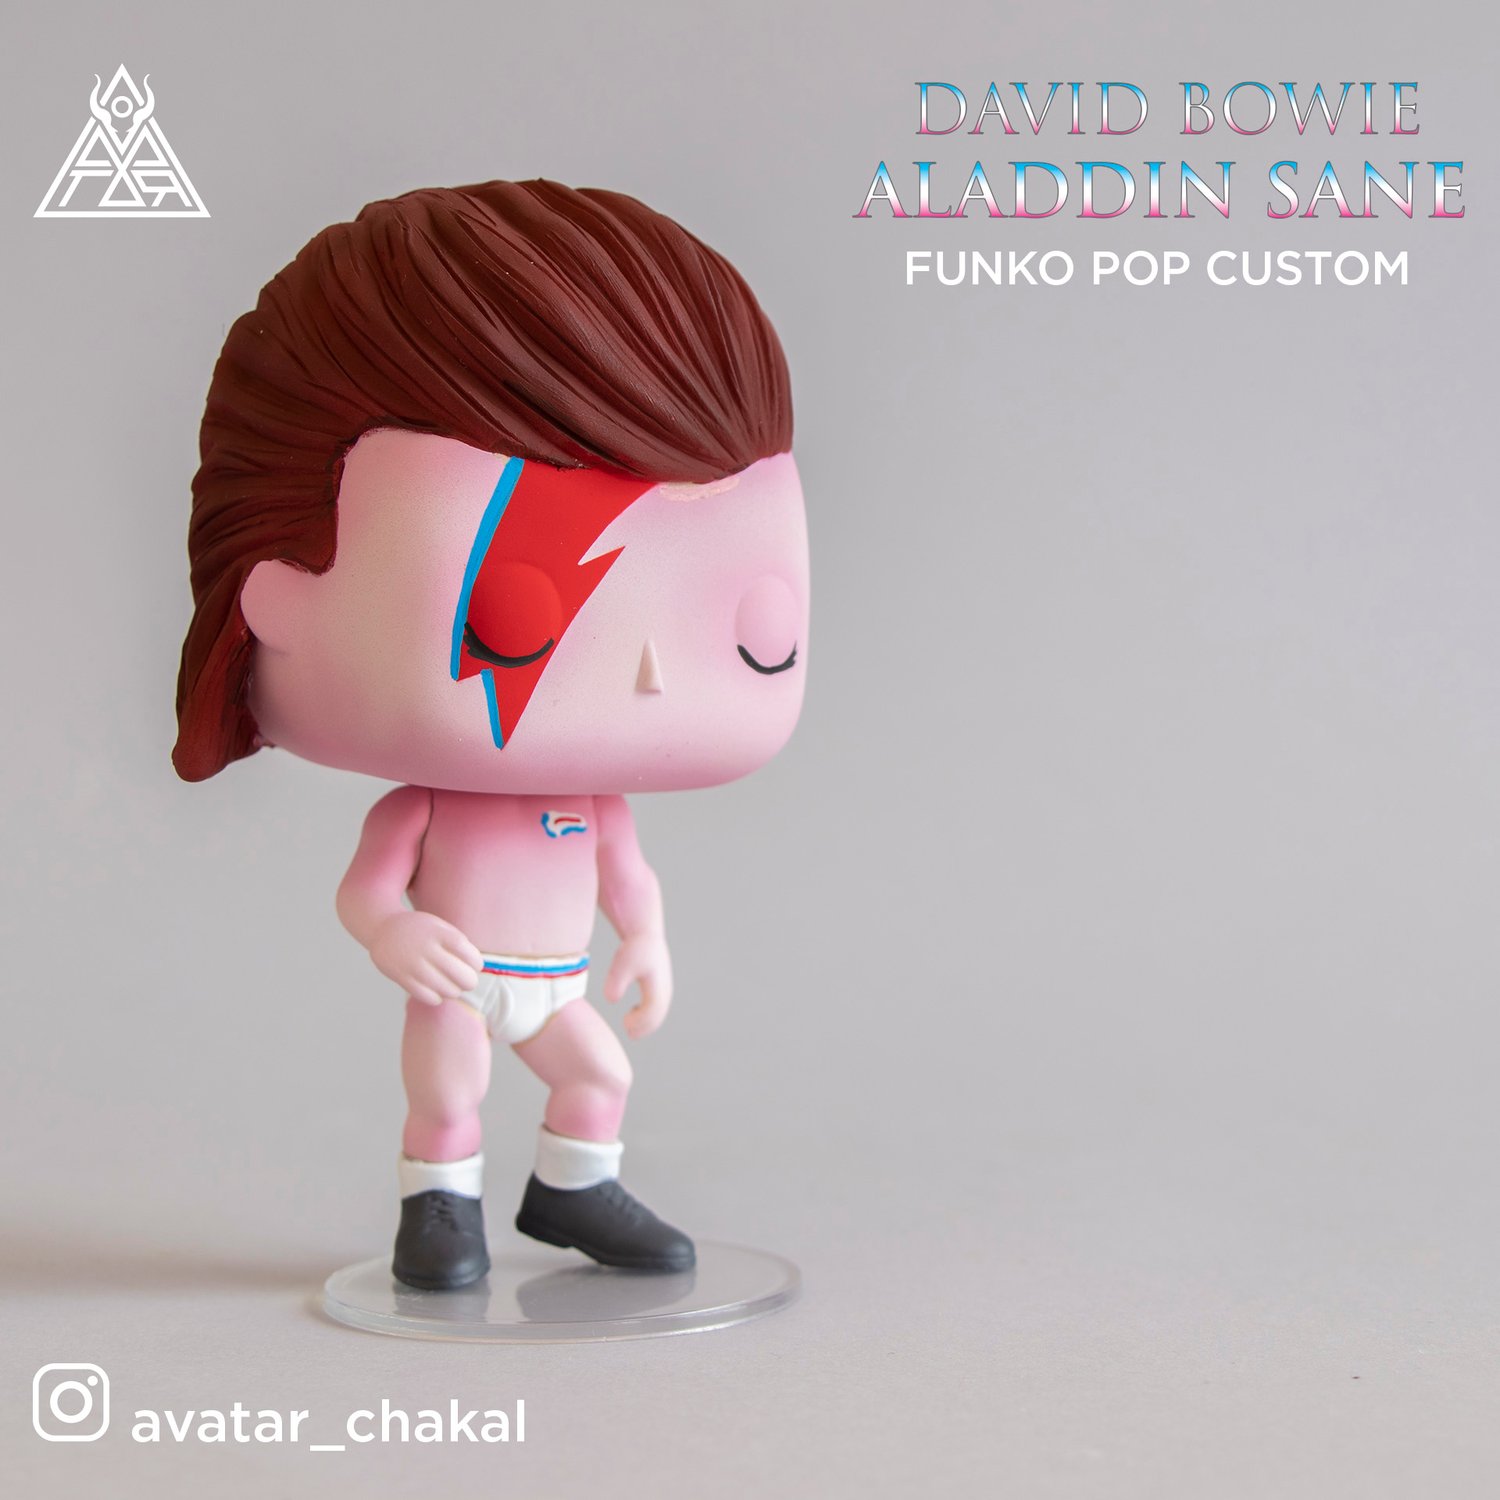 Image of David Bowie (funko pop custom)